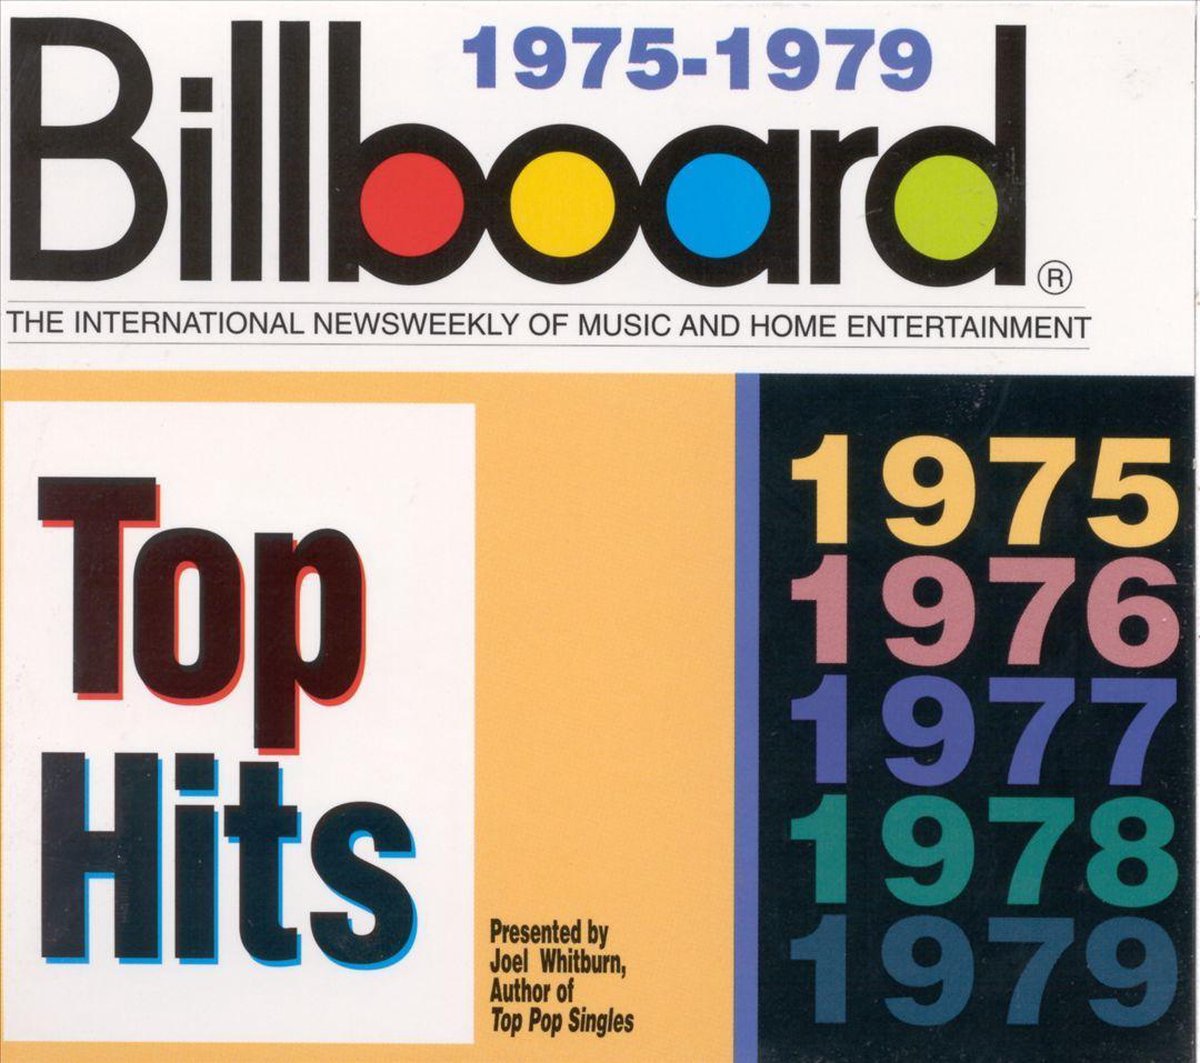 Billboard Top Hits 1975-79 - various artists